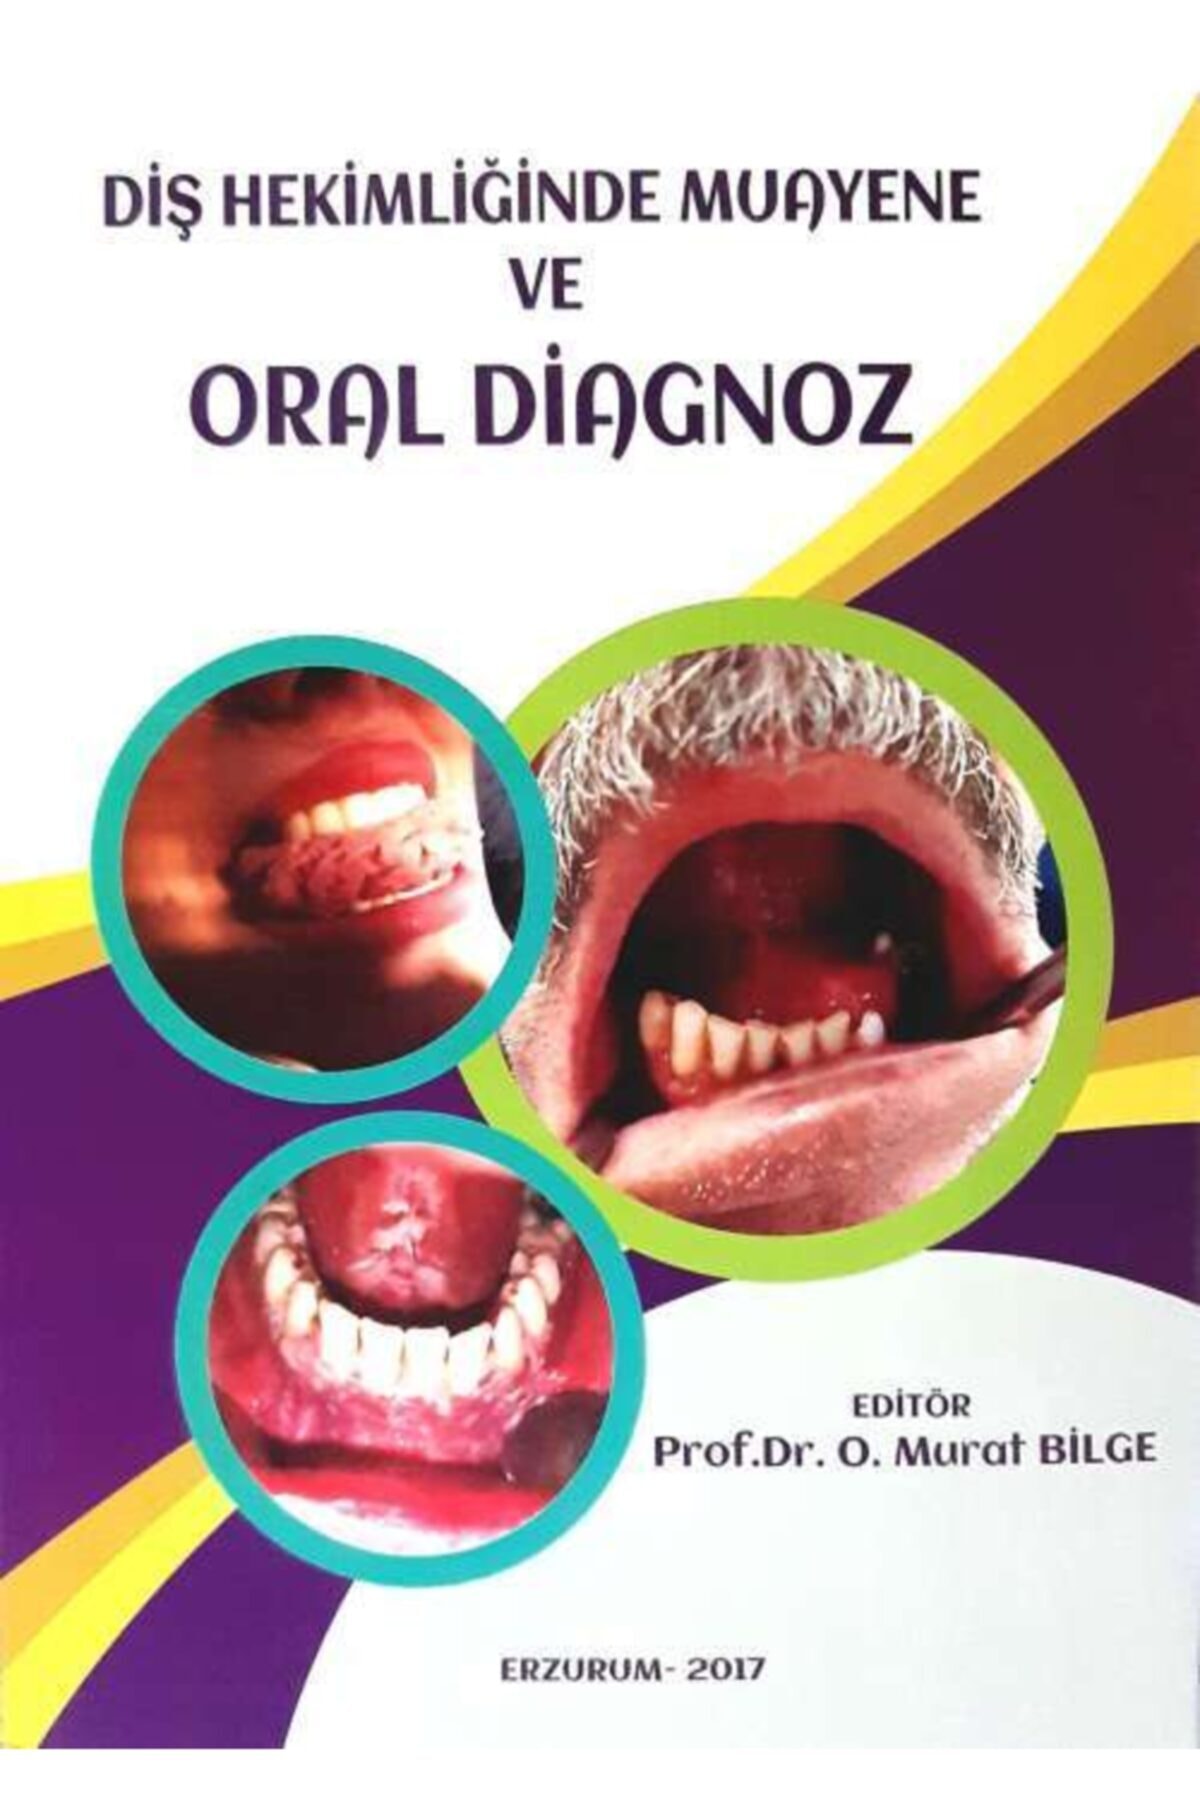 Examination and Oral Diagnosis in Dentistry